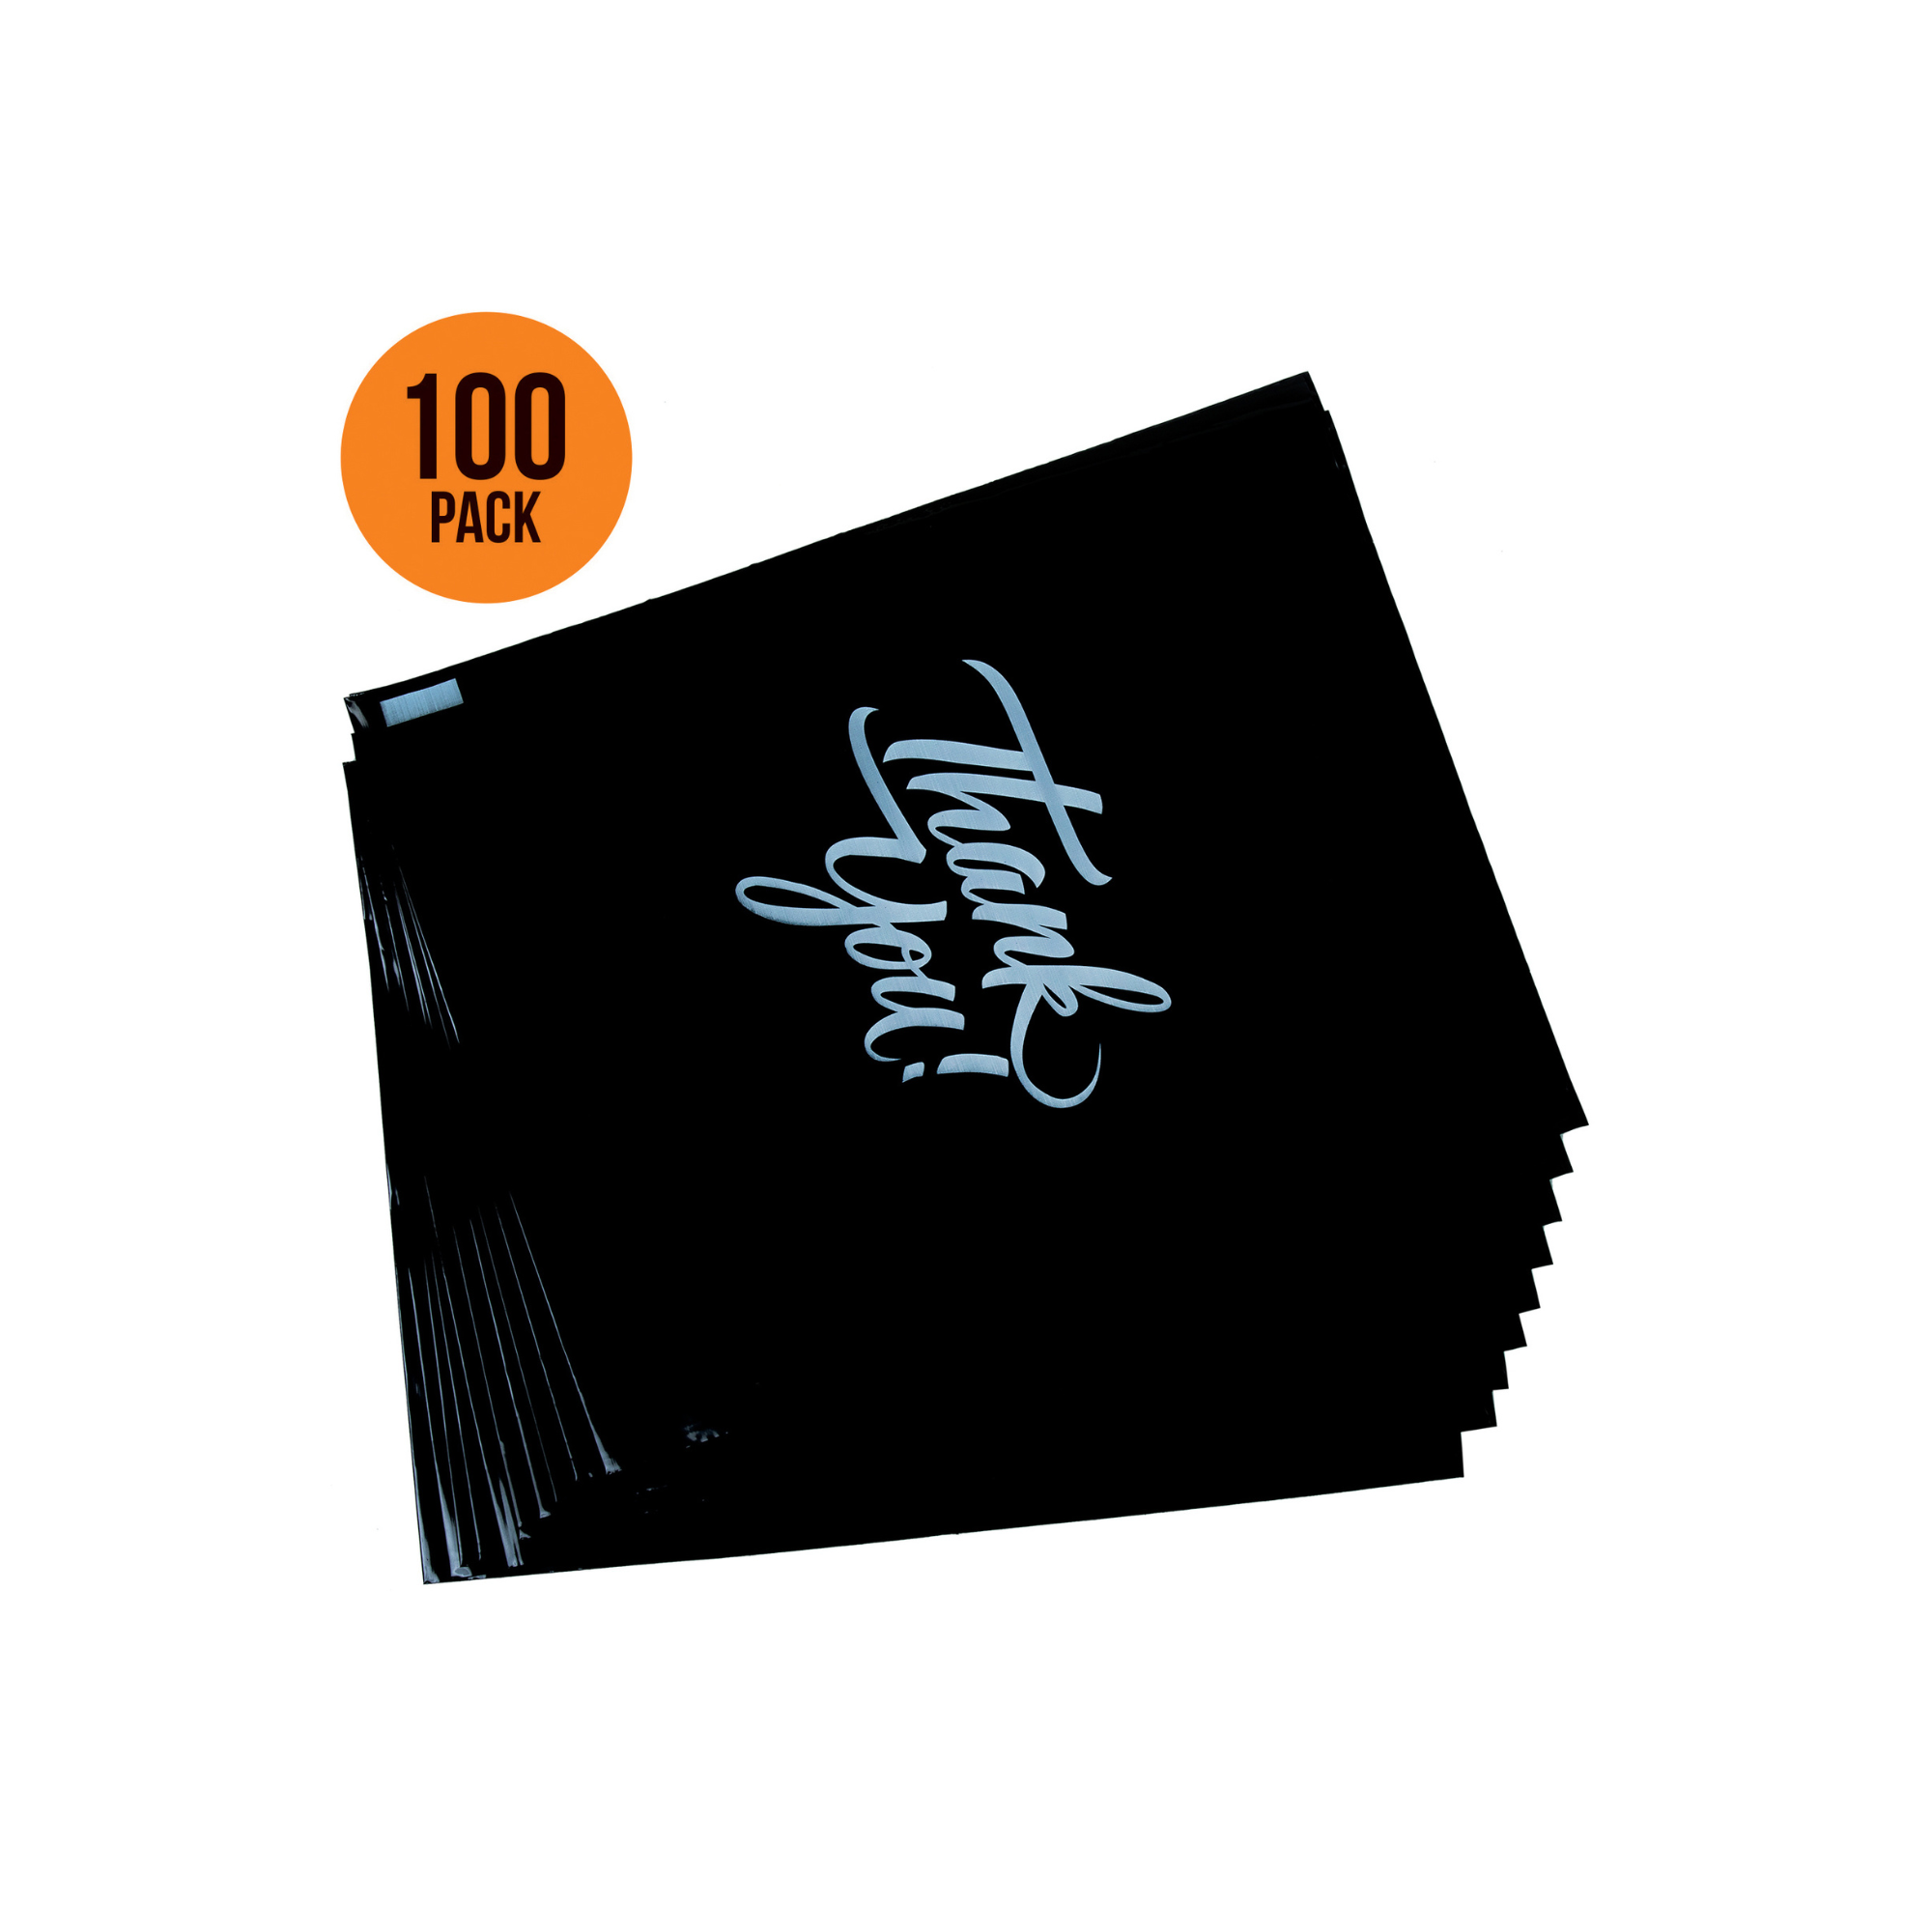 12x 15 Pack of 100 Thank You Printed Merchandise Bags 2.35 Mil With Die Cut Handle - Infinite Pack